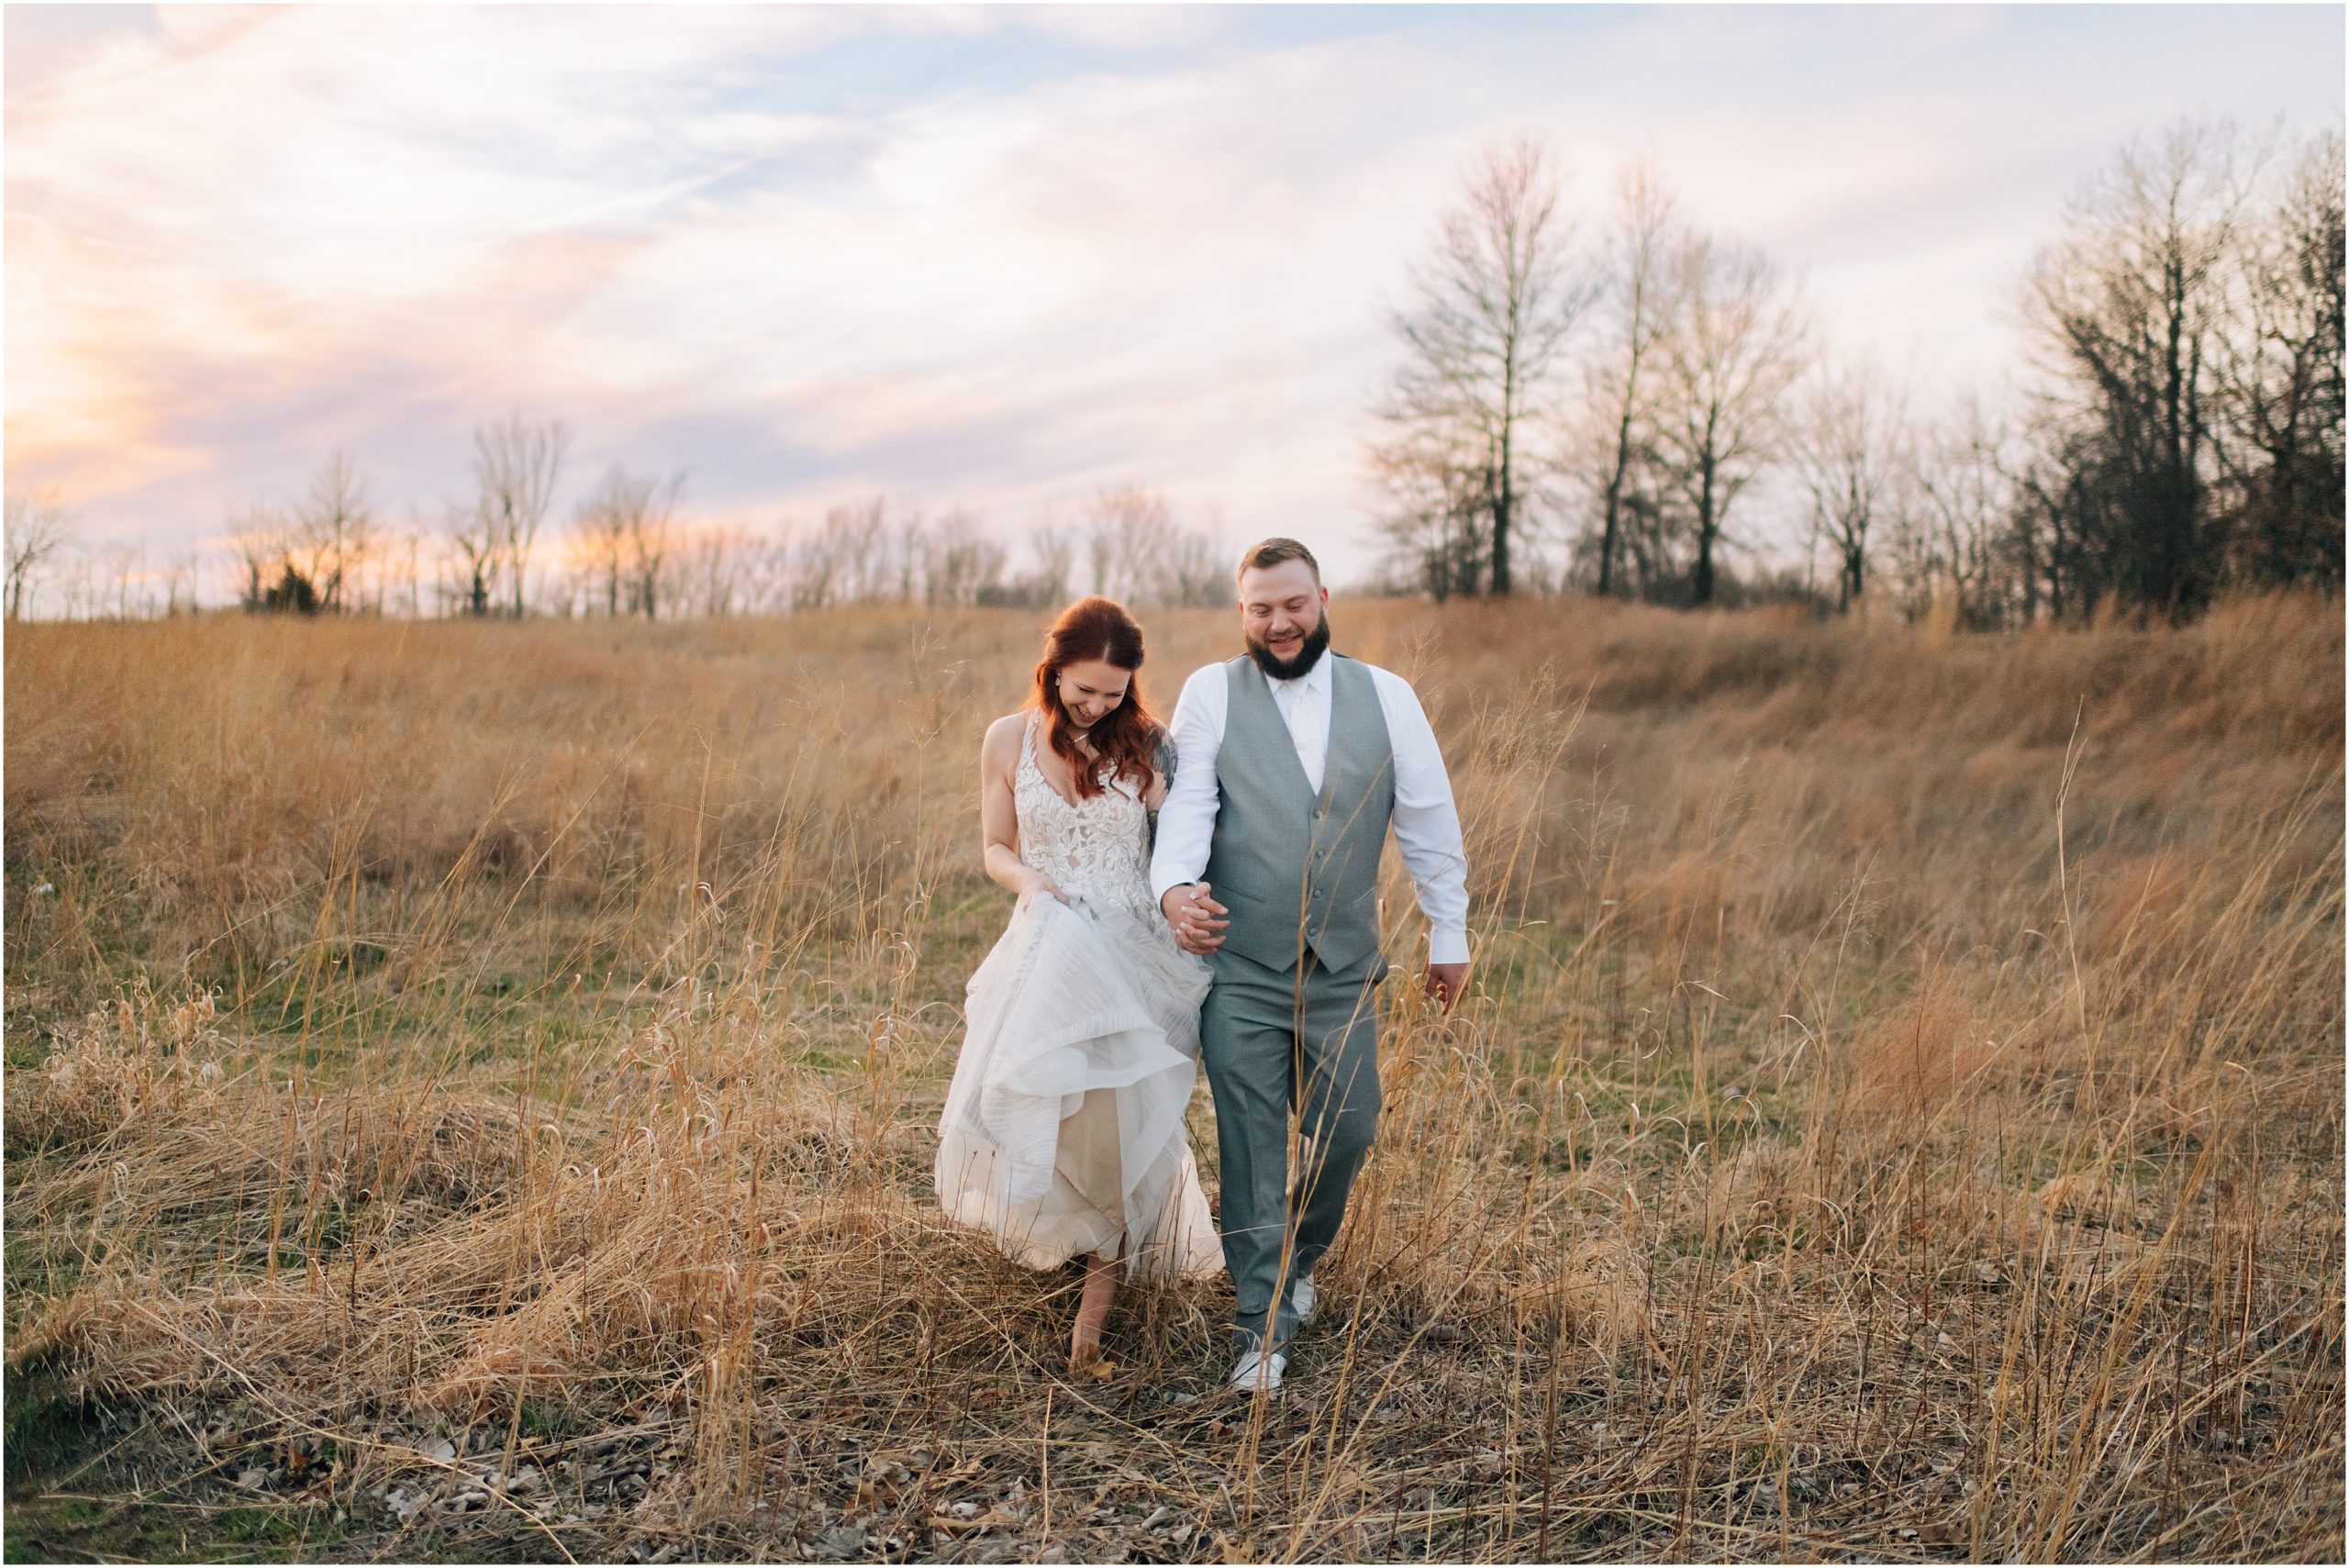 Couple walks through a field at Honey Creek Resort, Iowa - taken by Omaha wedding photographer, Anna Brace